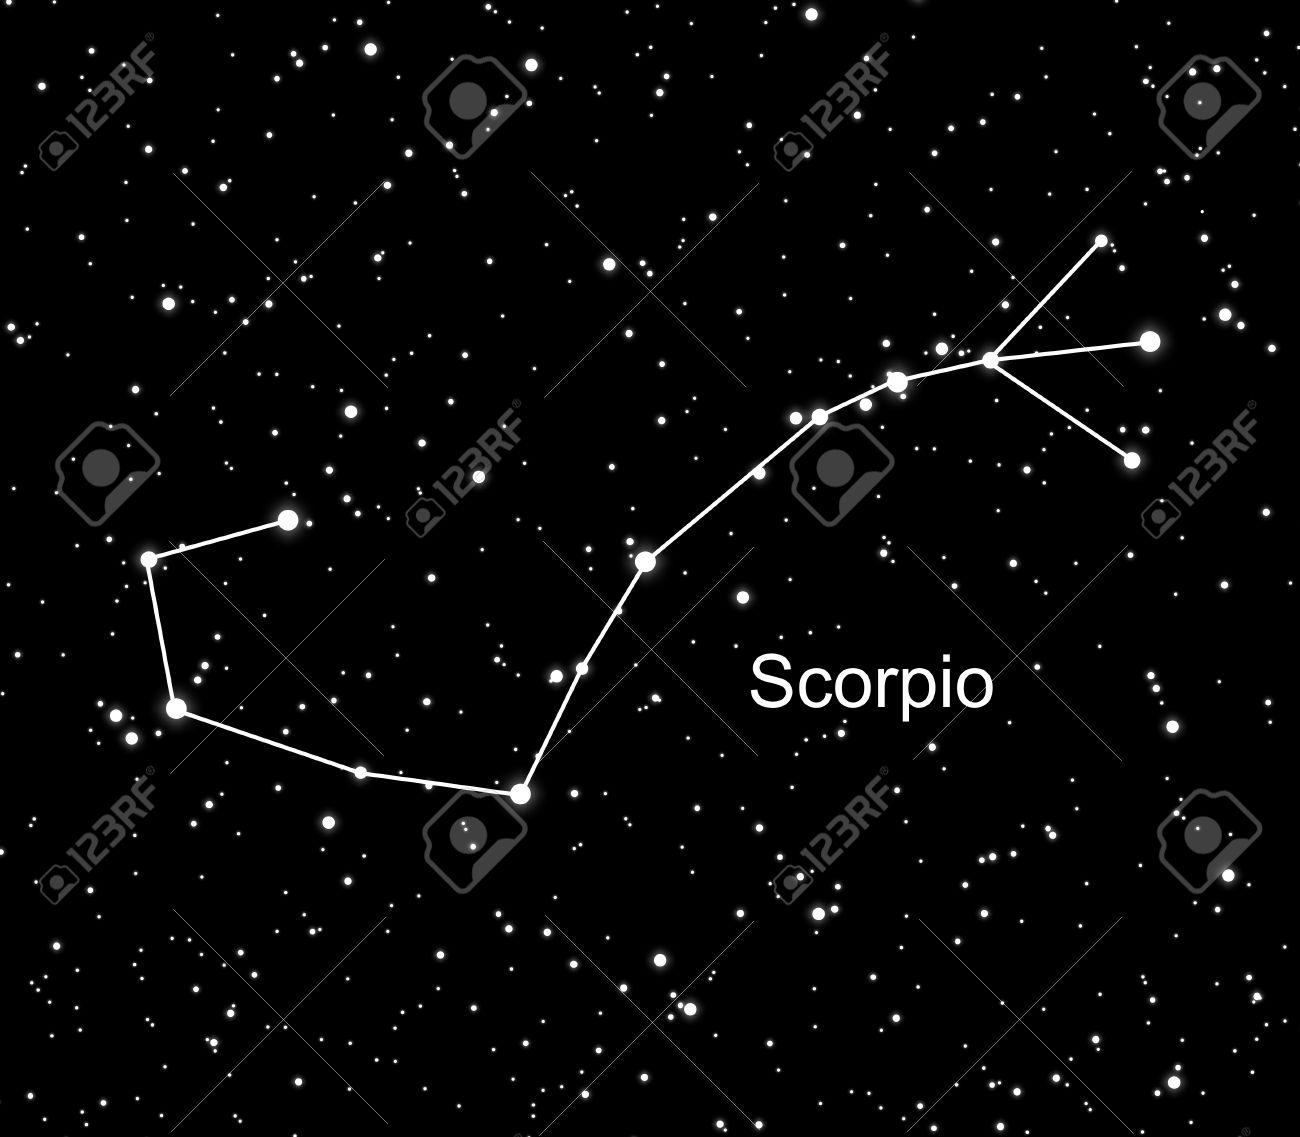 18915548-scorpio-constellation-with-the-shine-stars-in-universe-Stock-Photo.jpg